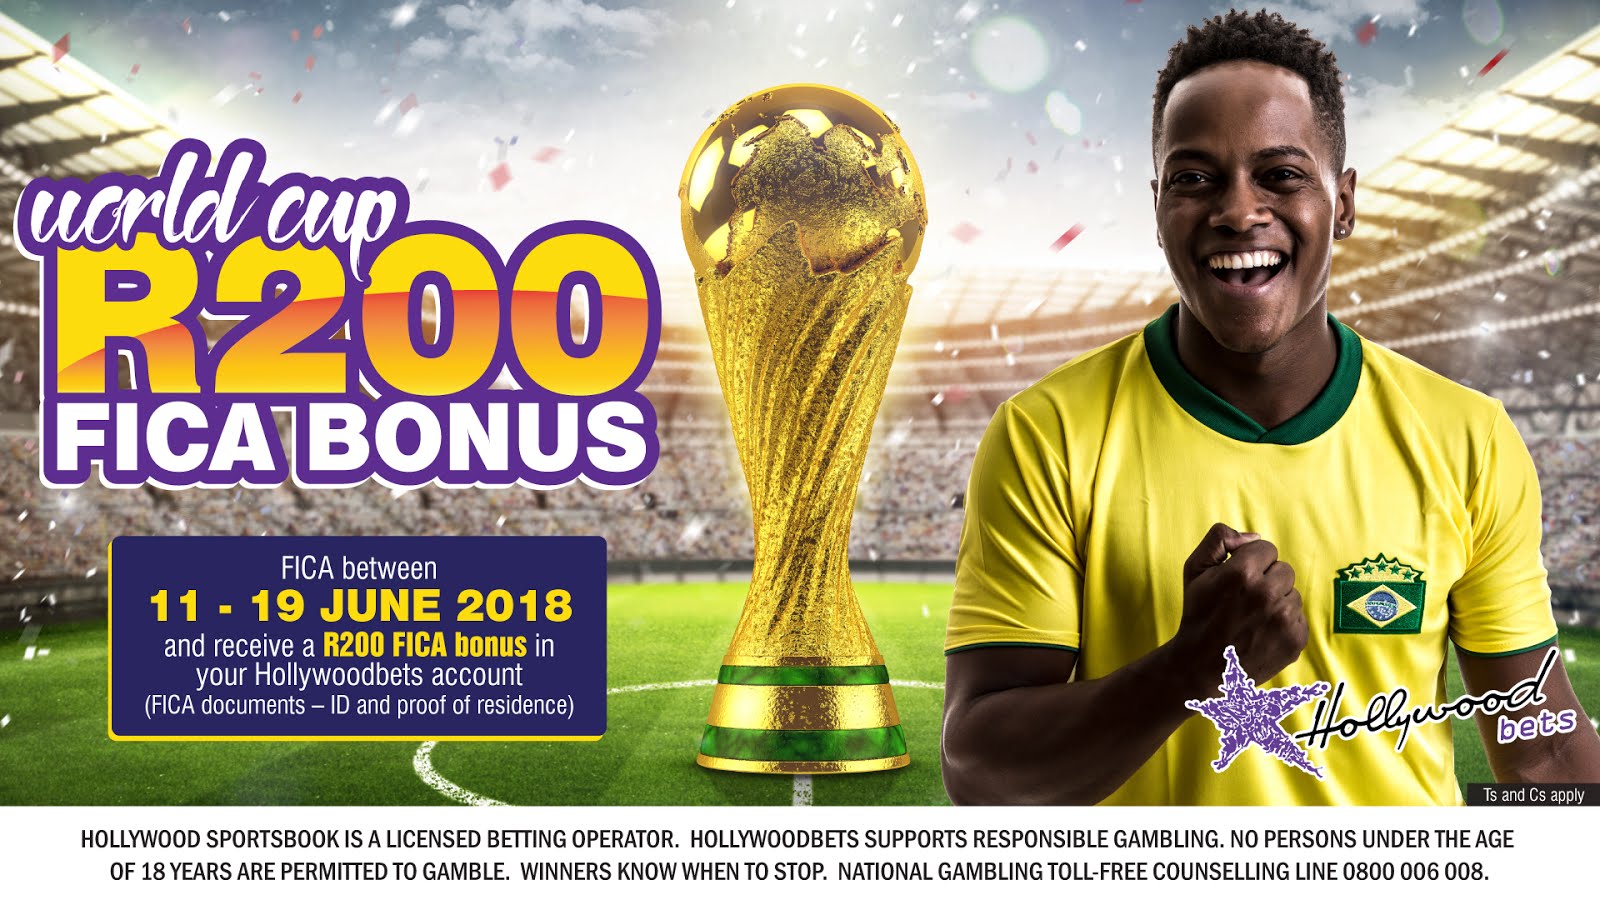 World Cup R200 FICA Bonus - Hollywoodbets